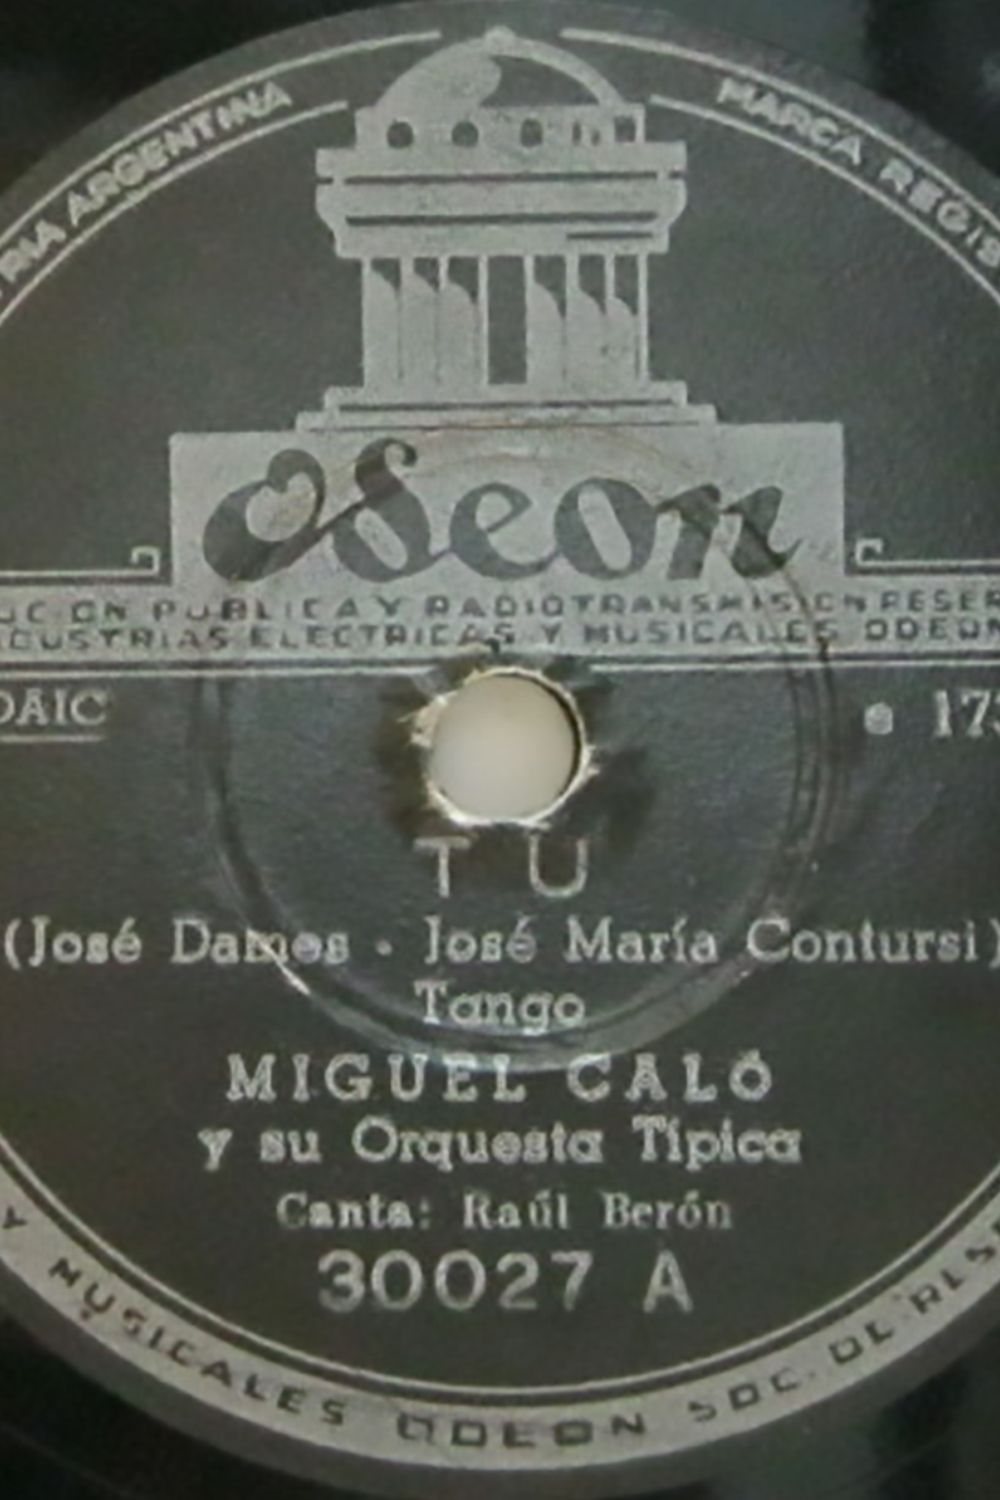 "Tu" Argentine Tango by Miguel Caló with Raúl Berón in vocals, vinyl disc.